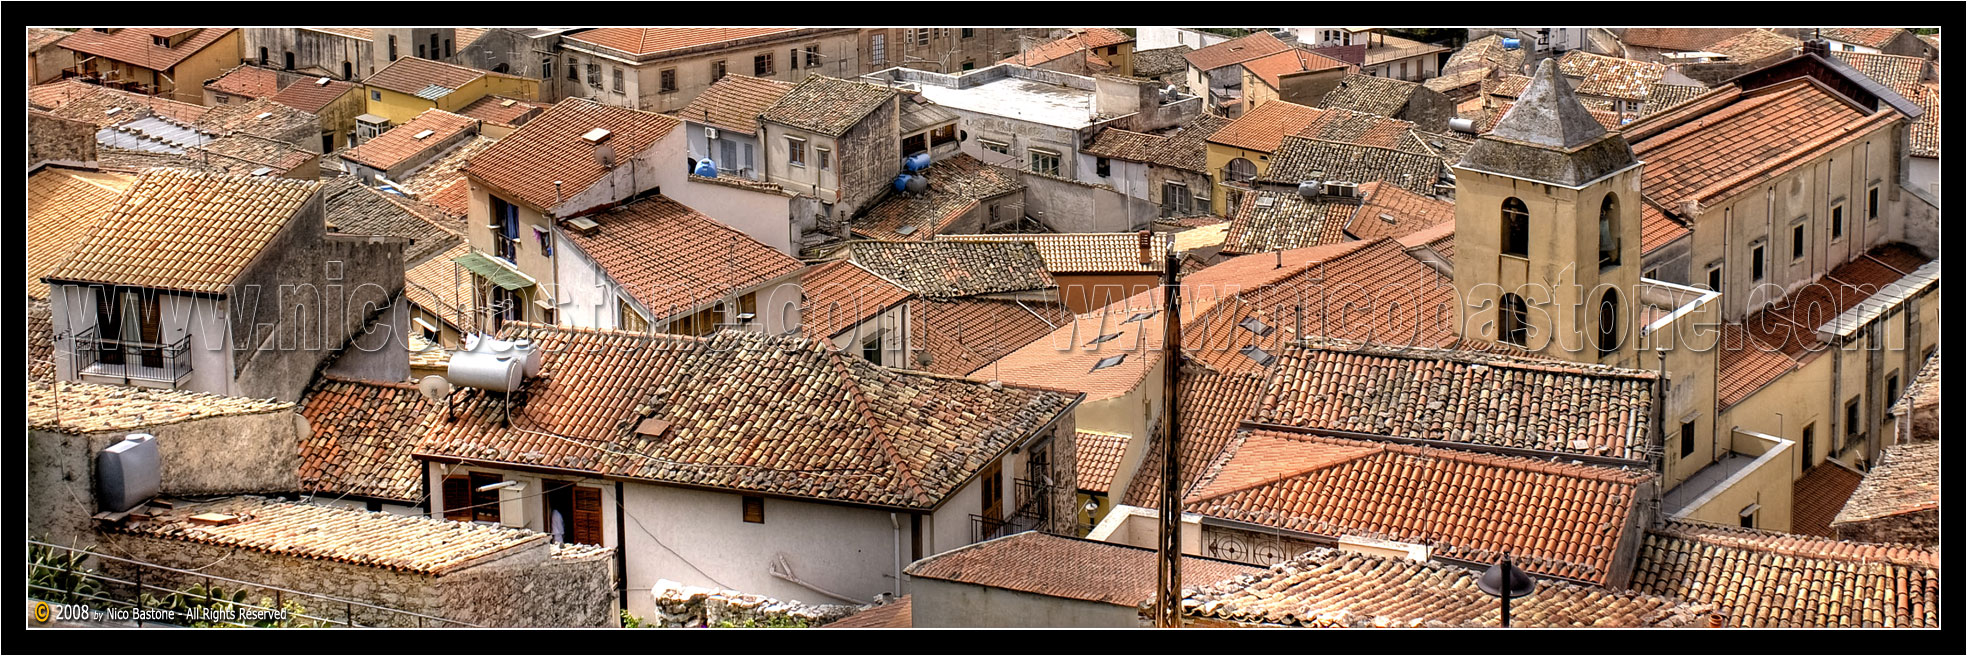 Piana degli Albanesi PA "Tetti - Roofs" 